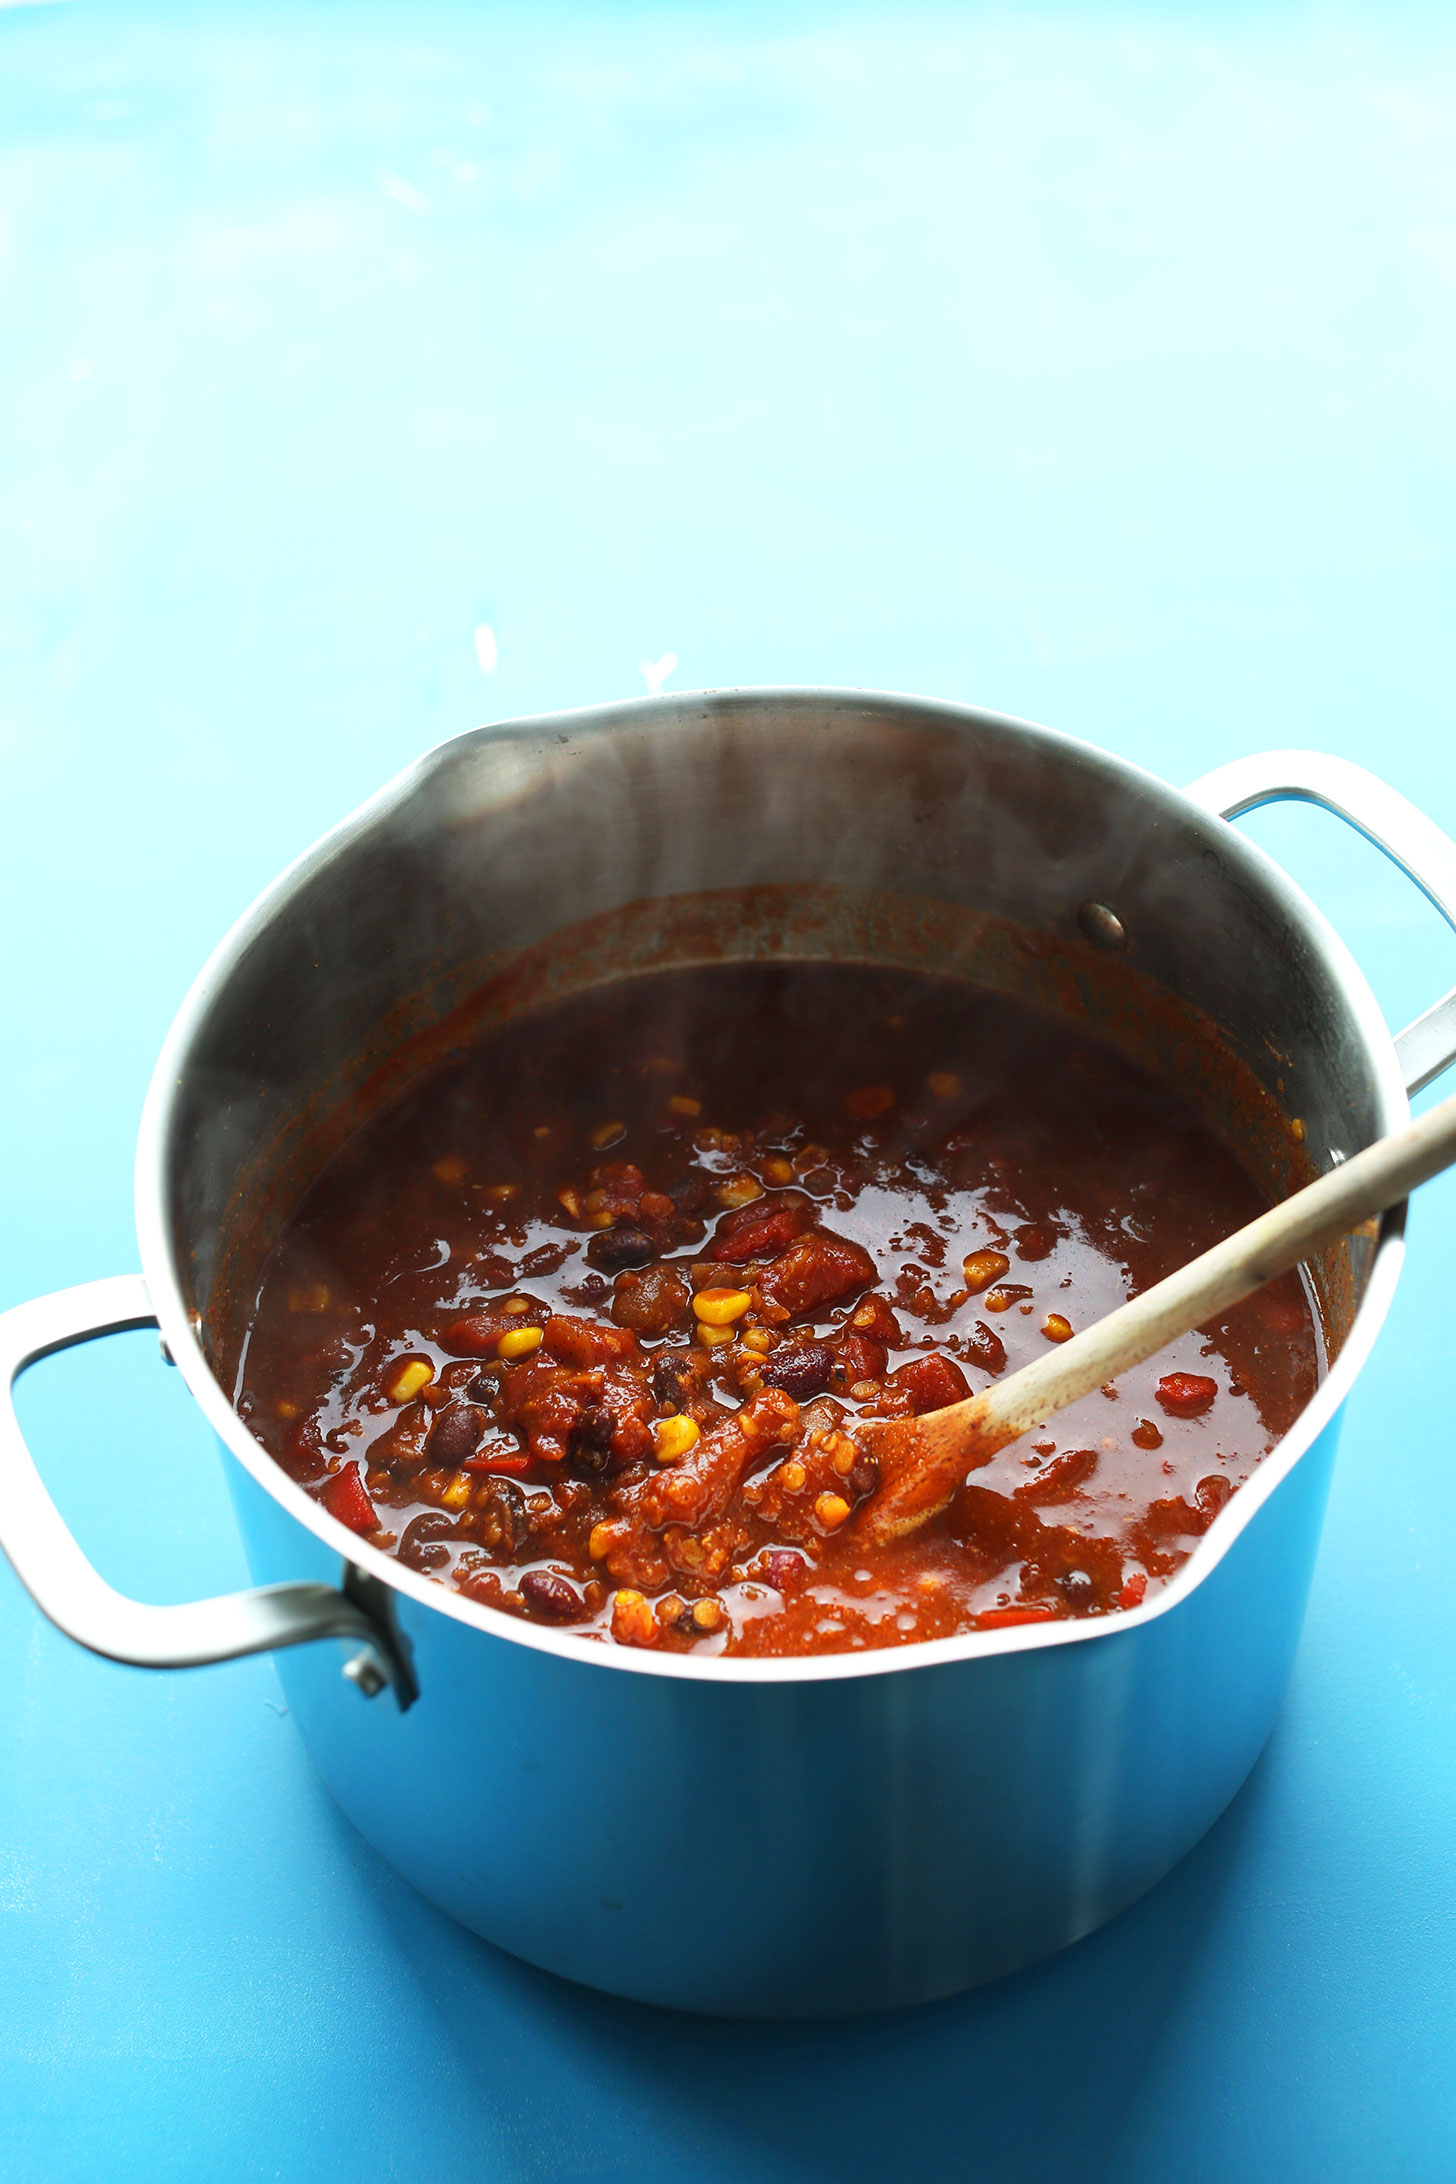 Big pot of our gluten-free vegan Lentil and Black Bean Chili recipe